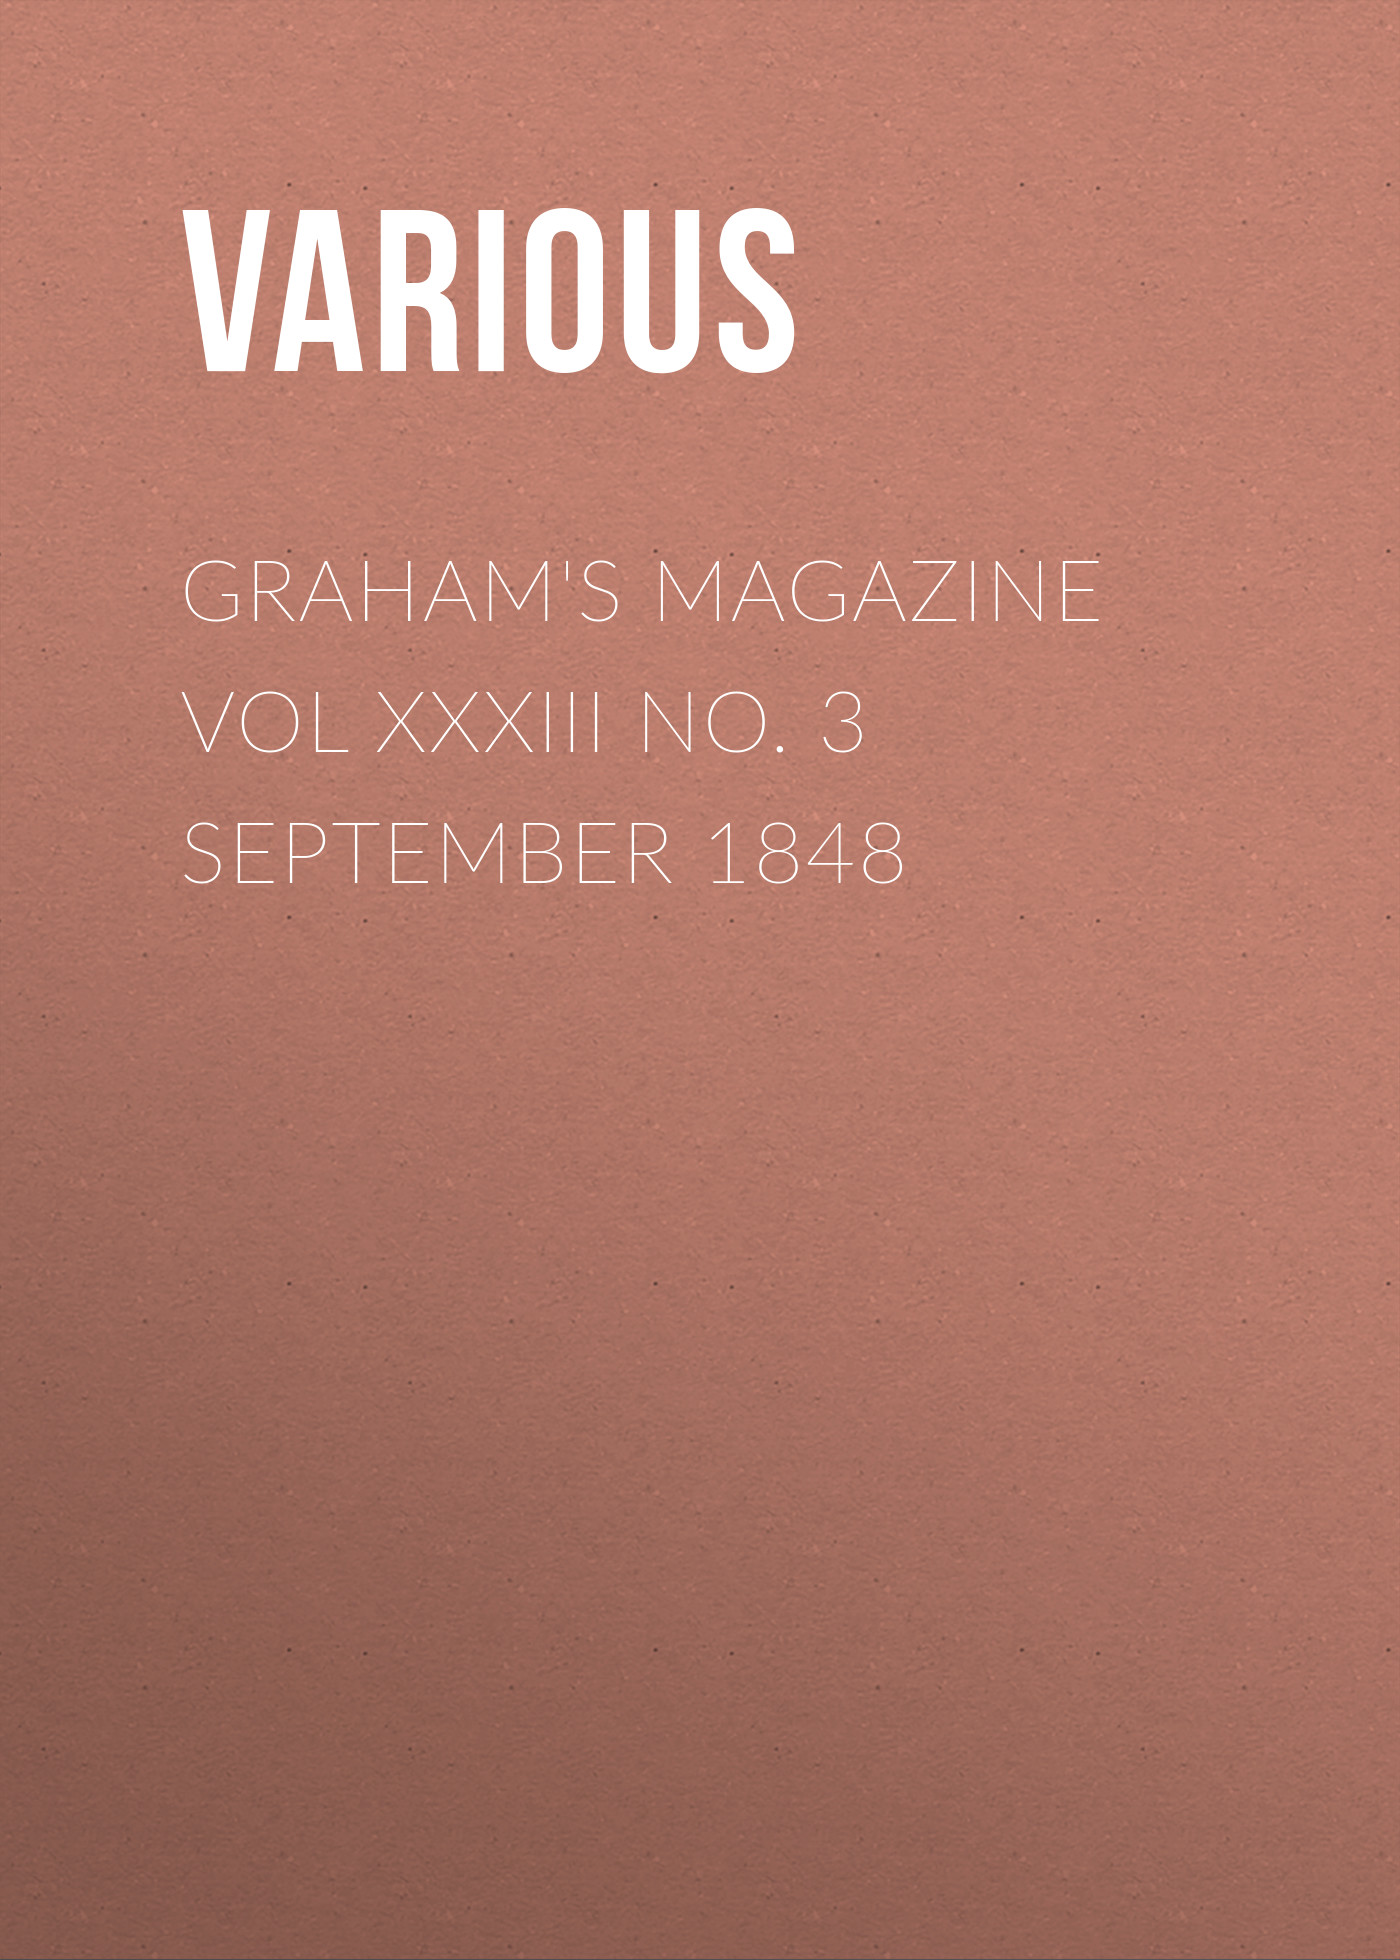 Graham's Magazine Vol XXXIII No. 3 September 1848